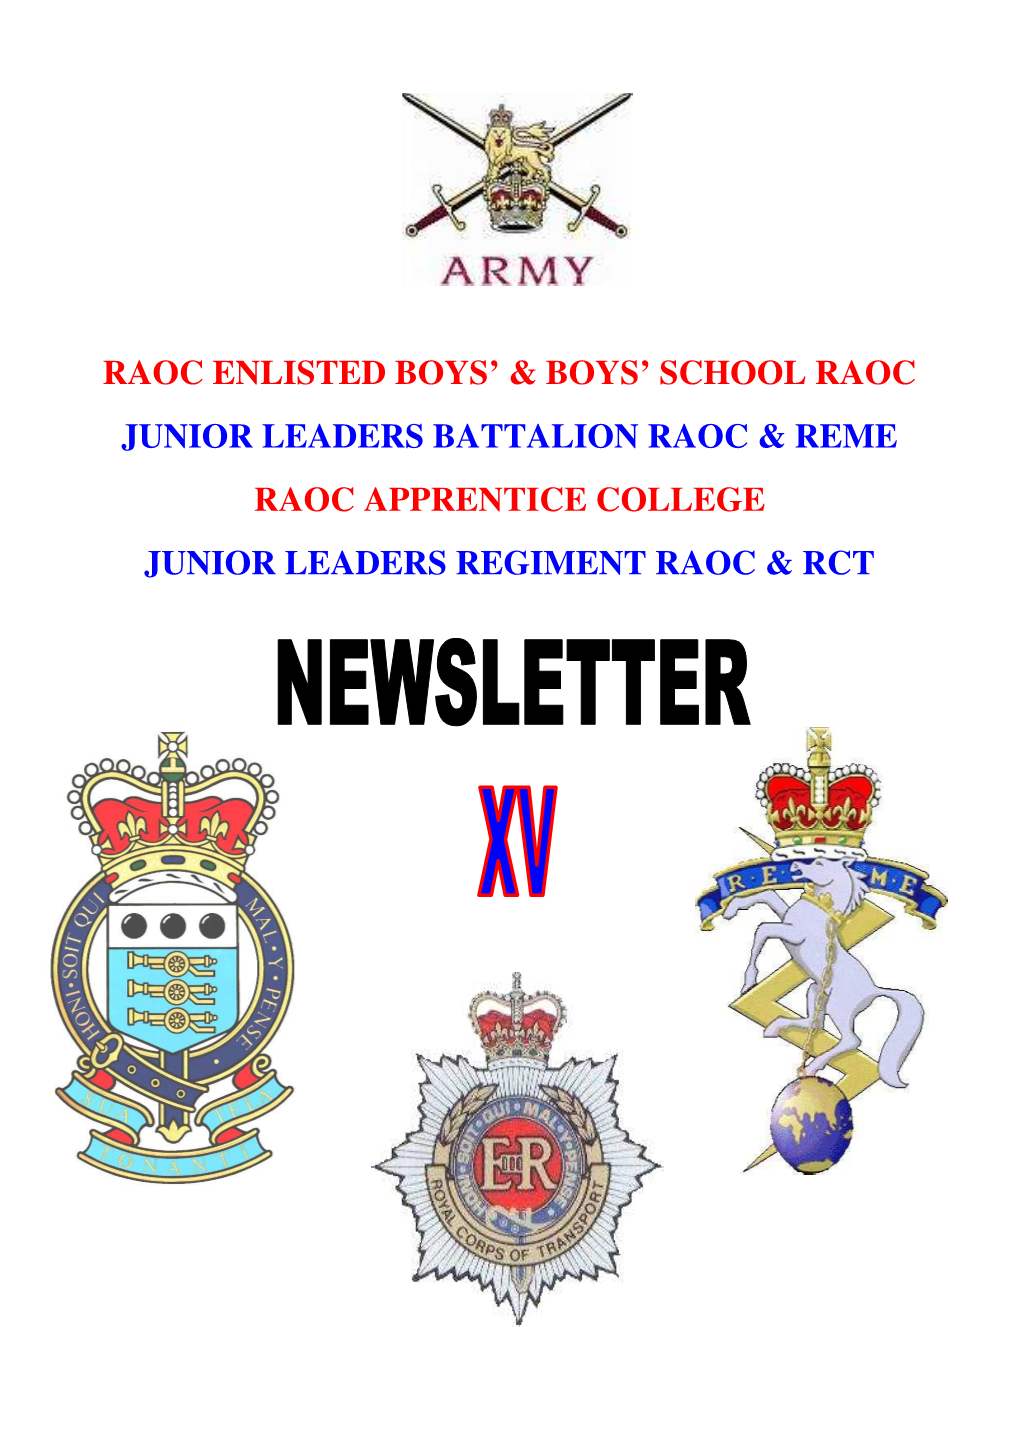 Raoc Apprentice College Junior Leaders Regiment Raoc & Rct